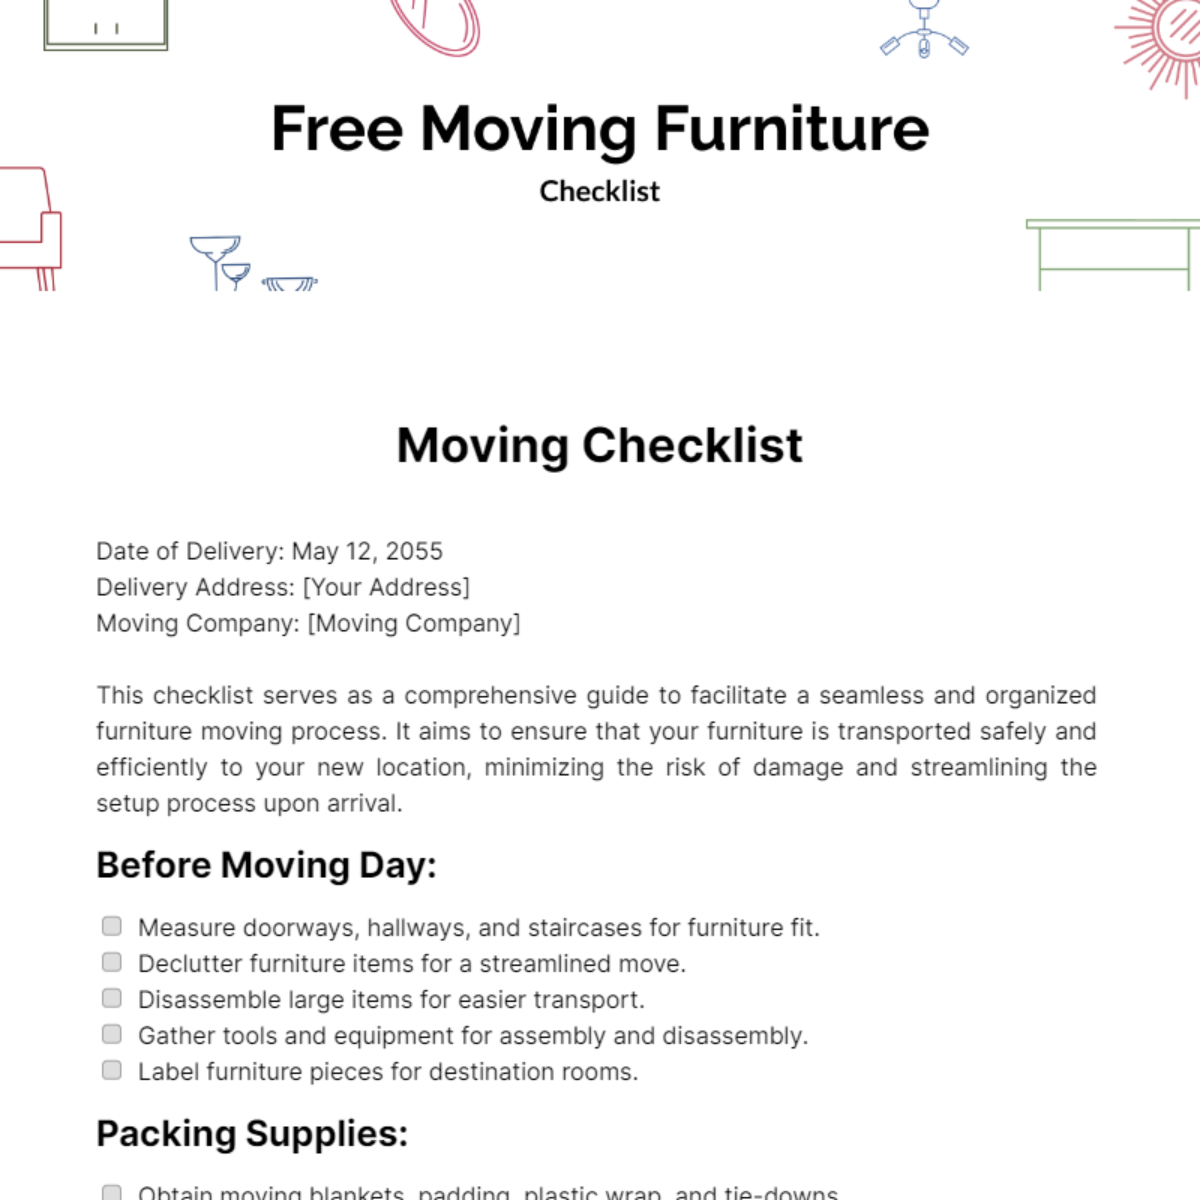 Moving Furniture Checklist Template